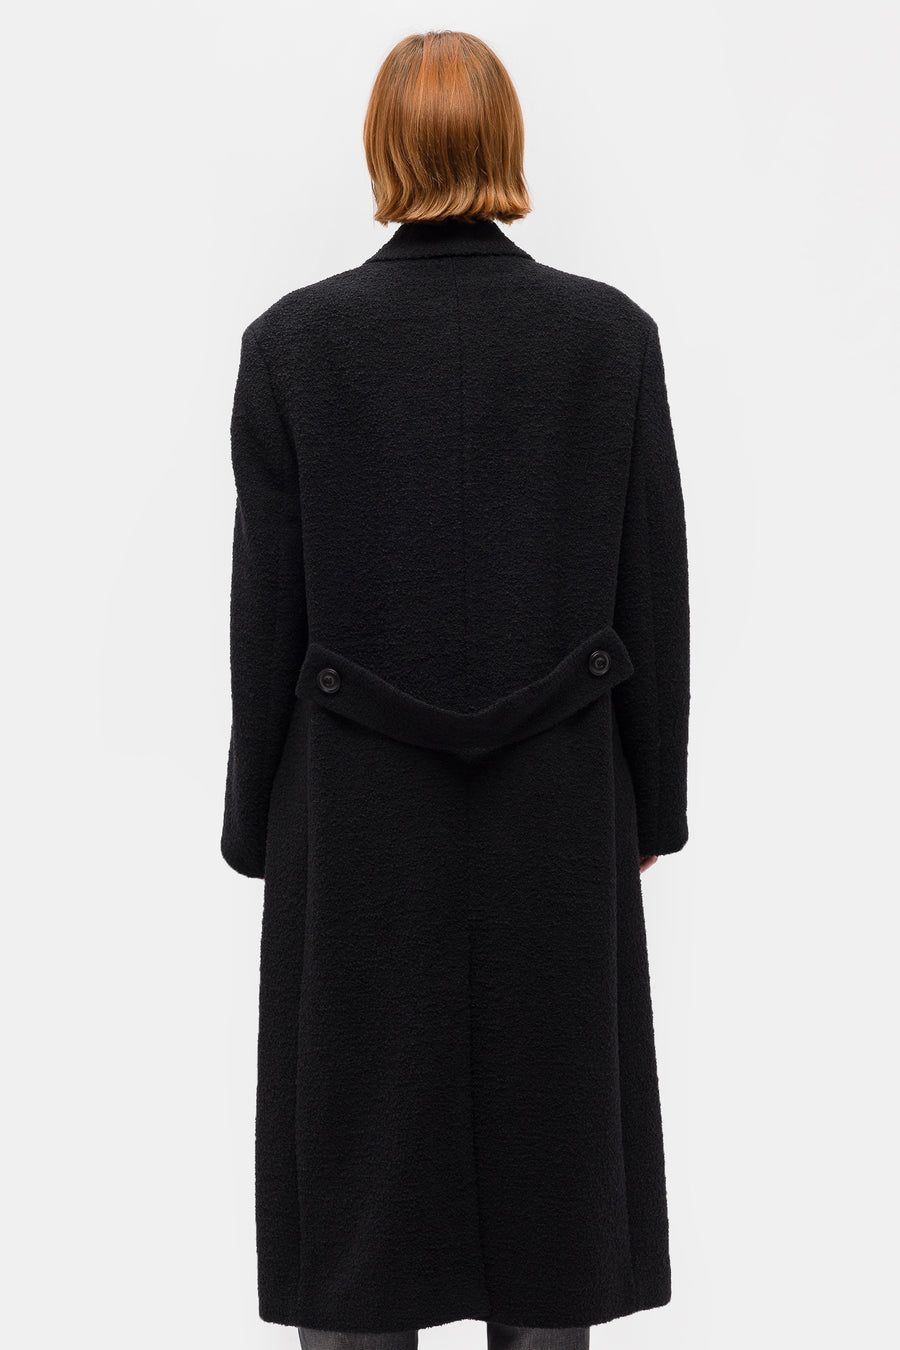 Ojama Wool Blend Bouclé Coat in Black